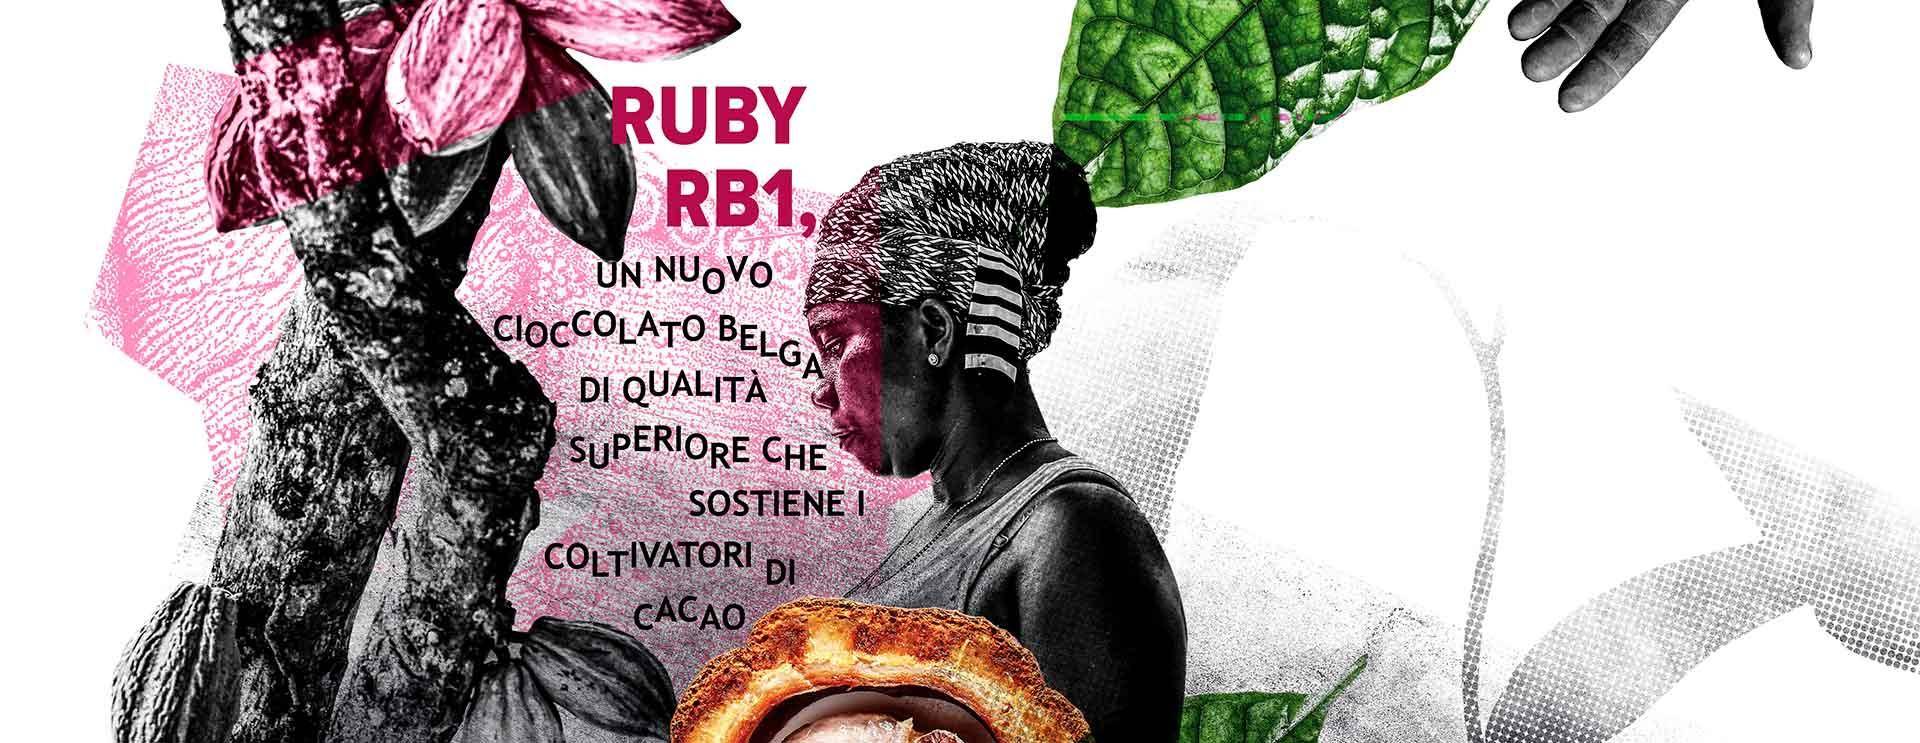 Ruby RB1 Cioccolato